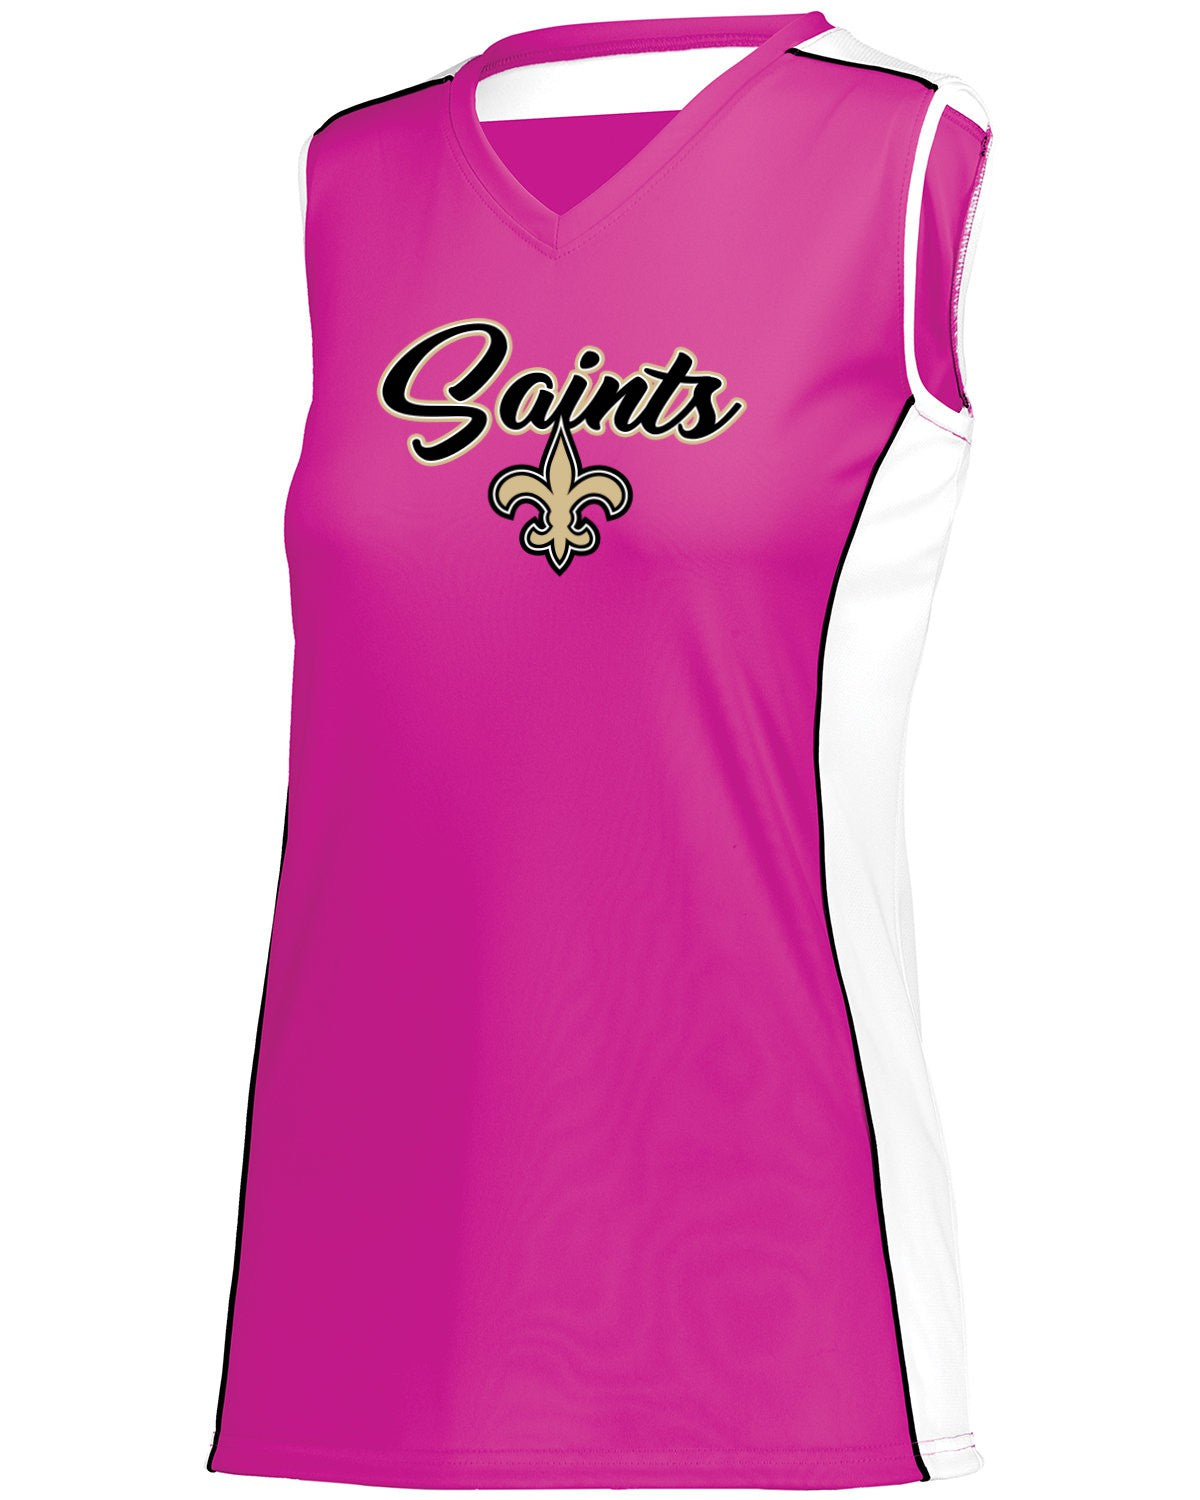 new orleans saints basketball jersey